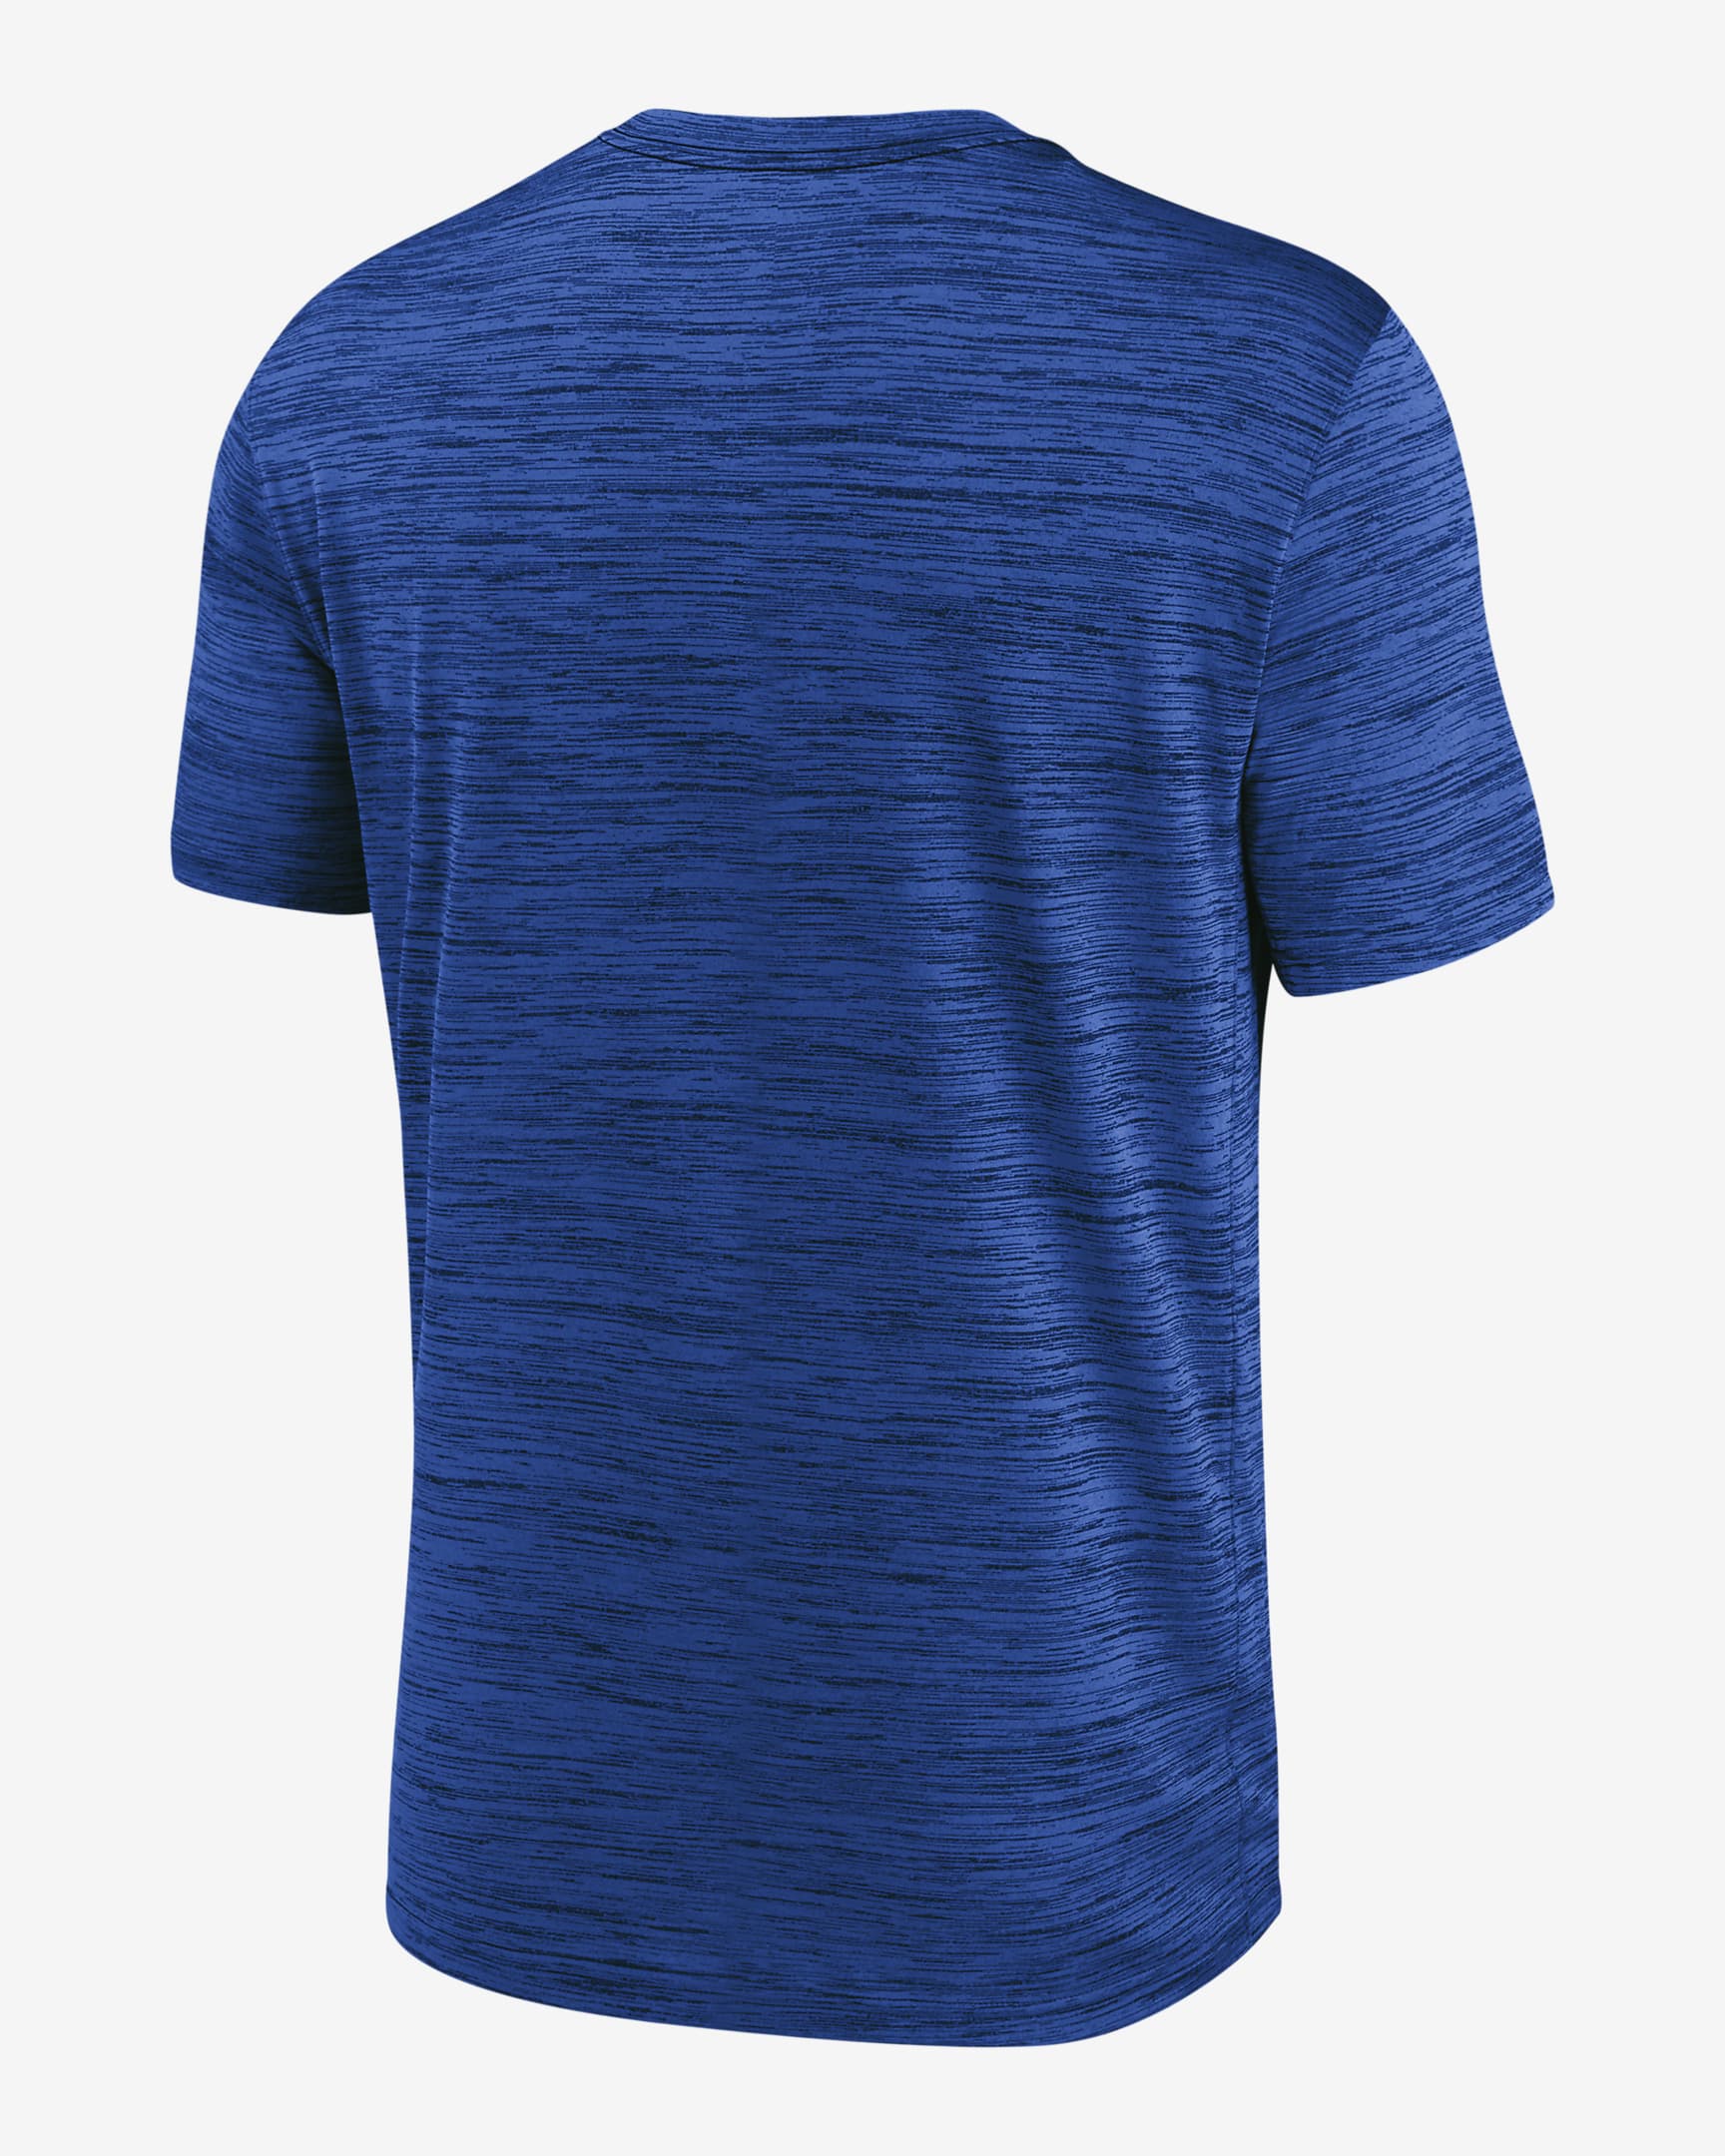 Nike Dri-FIT Sideline Velocity (NFL Los Angeles Rams) Men's T-Shirt ...